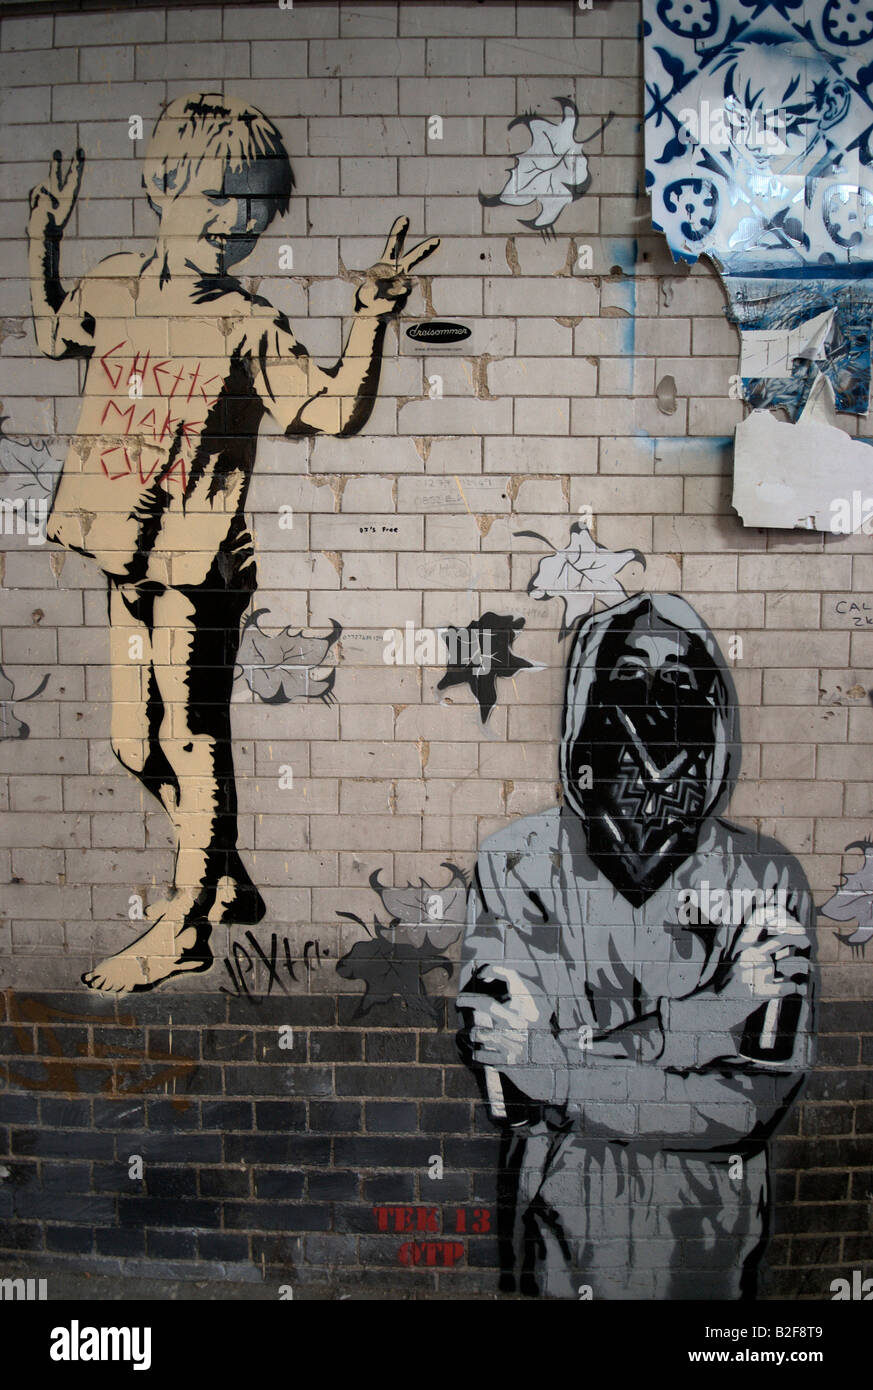 Cans Festival stencil grafitti artwork underneath Waterloo train station, London, UK. Stock Photo